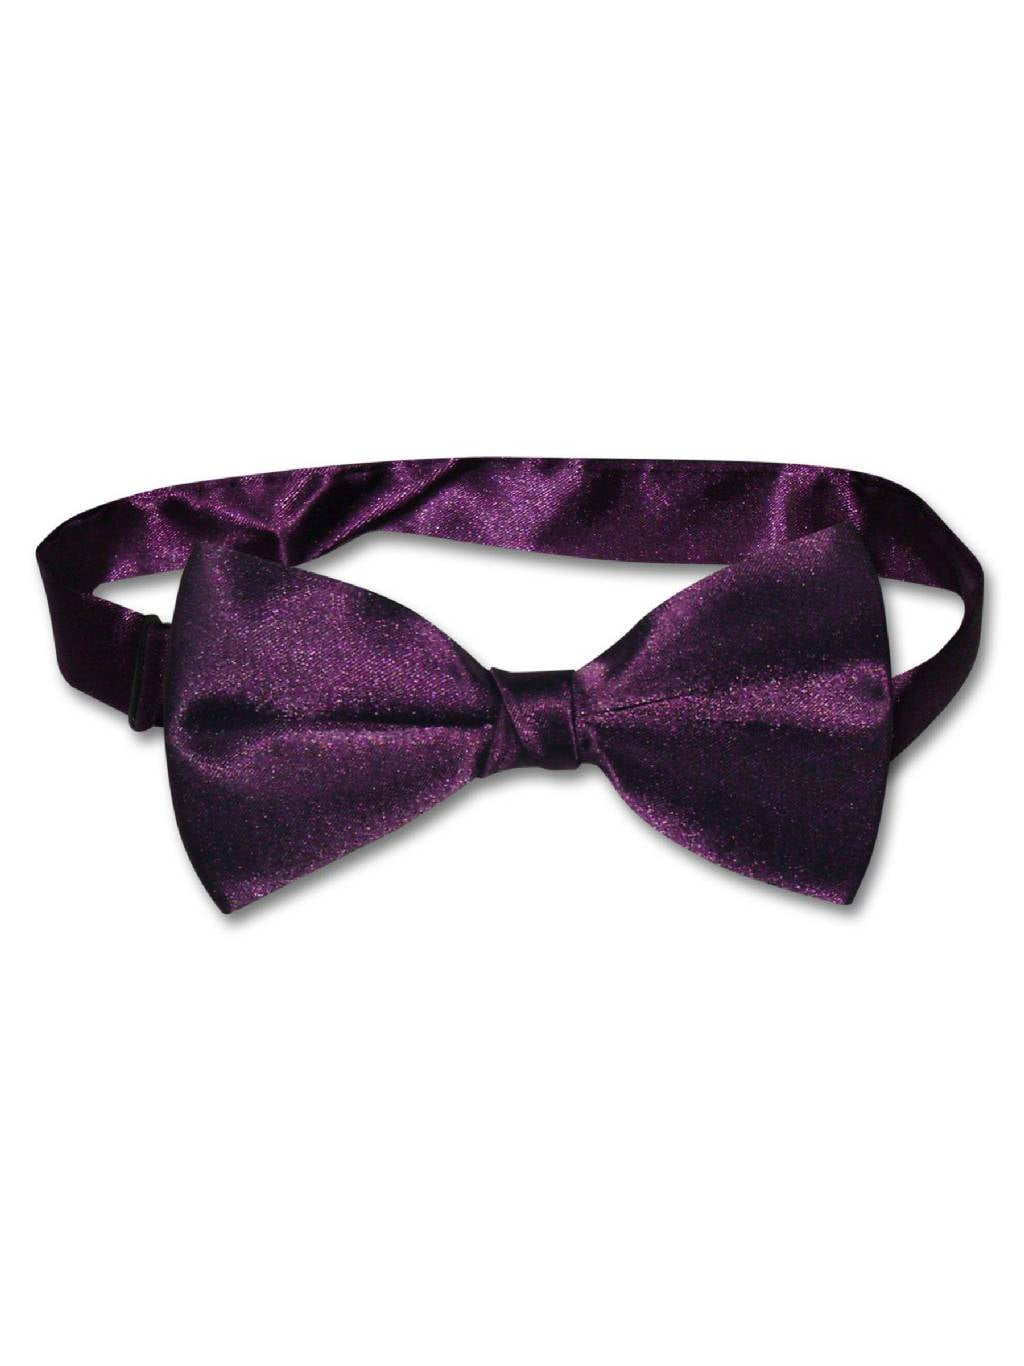 Self Tie Solid Satin Formal Bow Tie Classic Purple